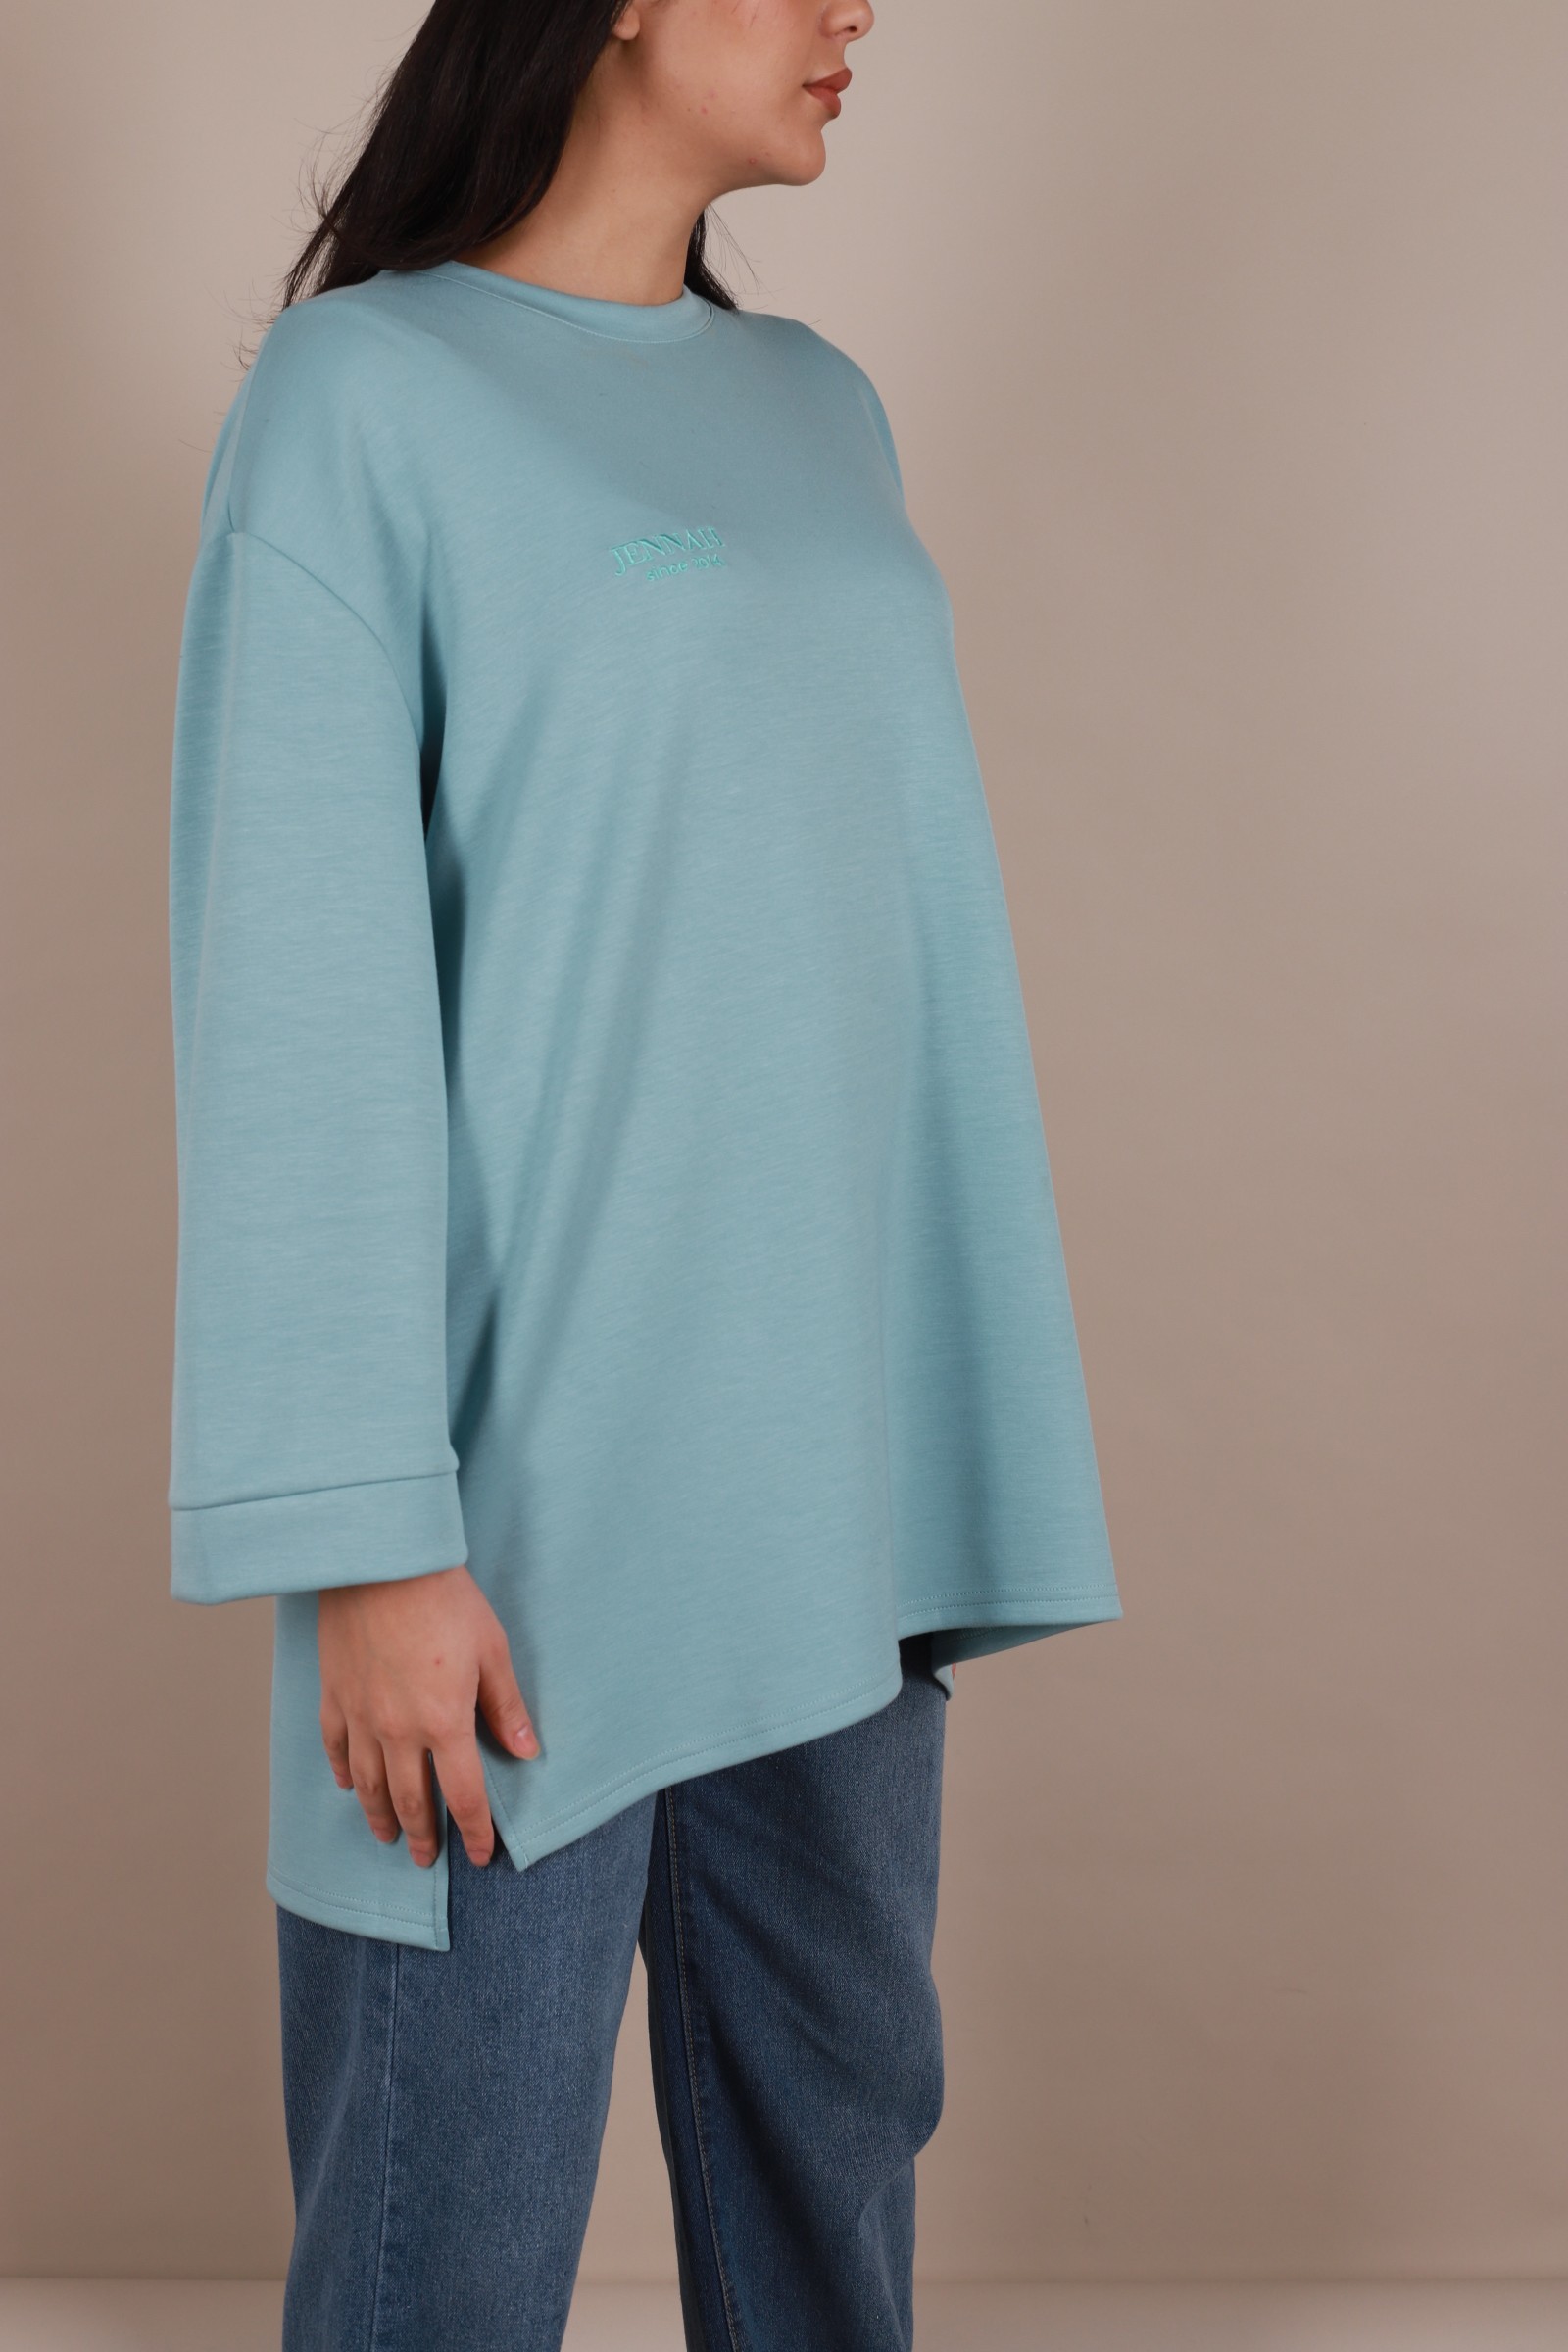 women t-shirt long sleeve modest fashion